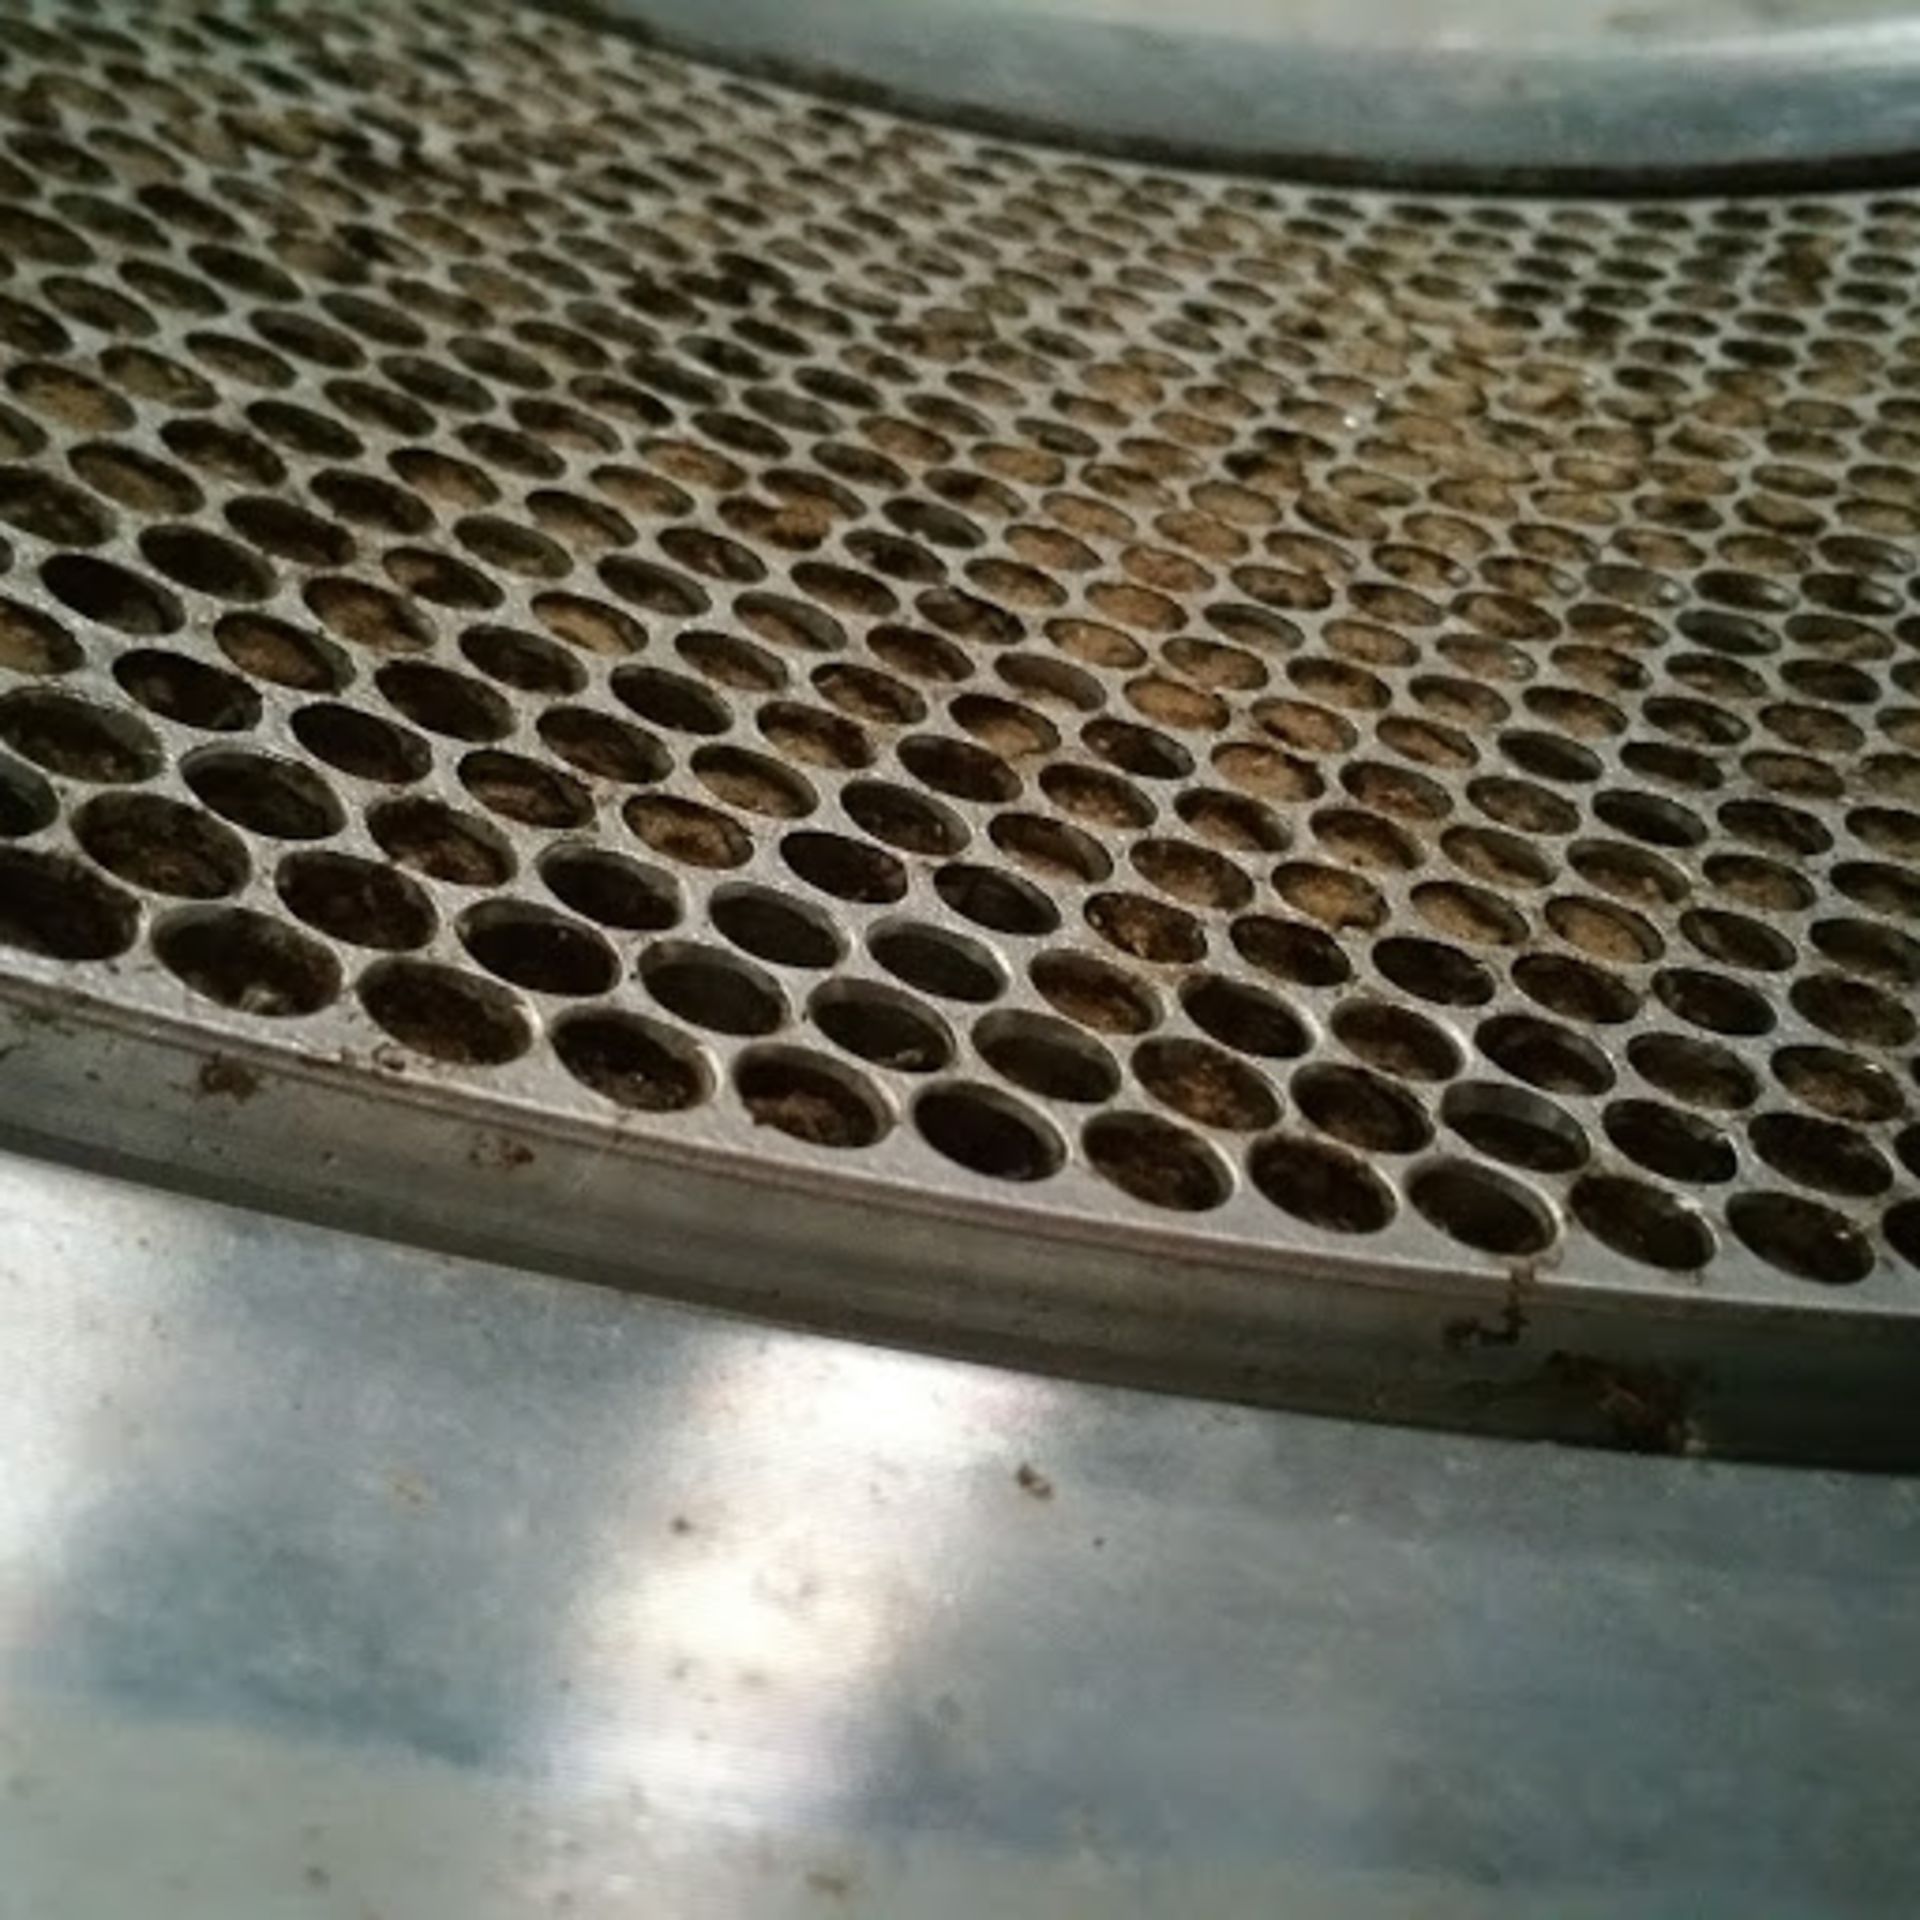 Pellet Press Spares - Unused 6.0mm Die, for Compress 235 pellet press. The die is 110 mm thick and - Image 2 of 2